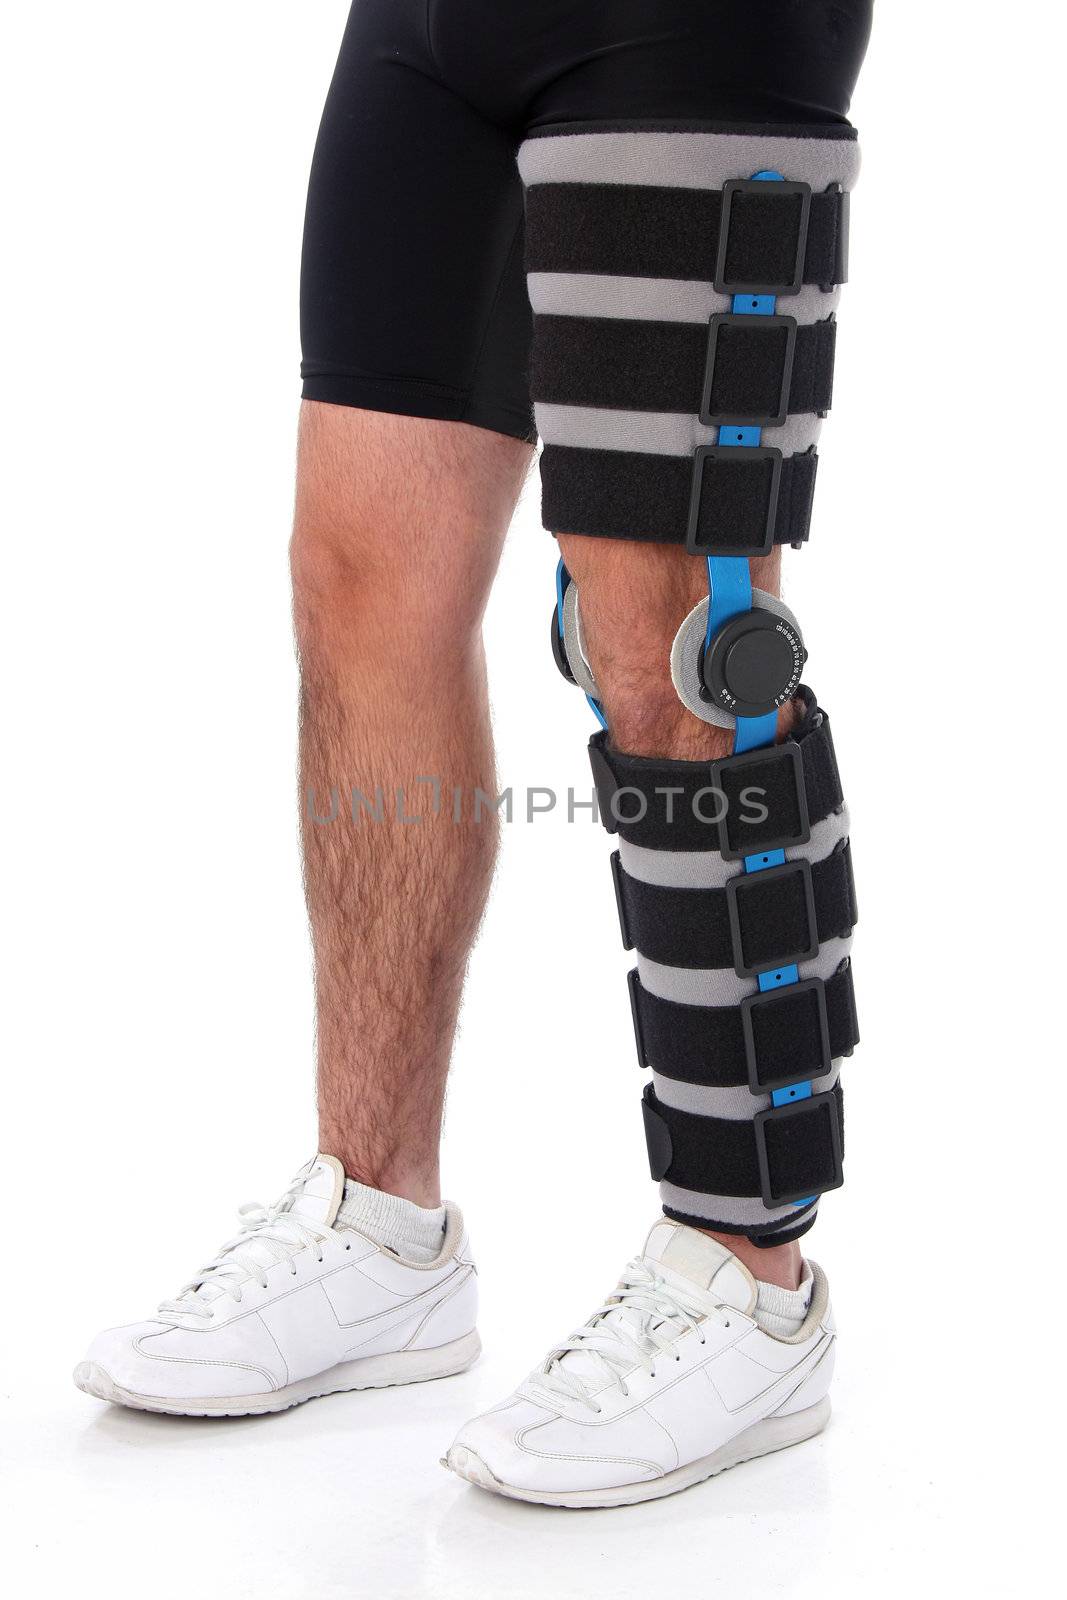 Man wearing a leg brace by Erdosain